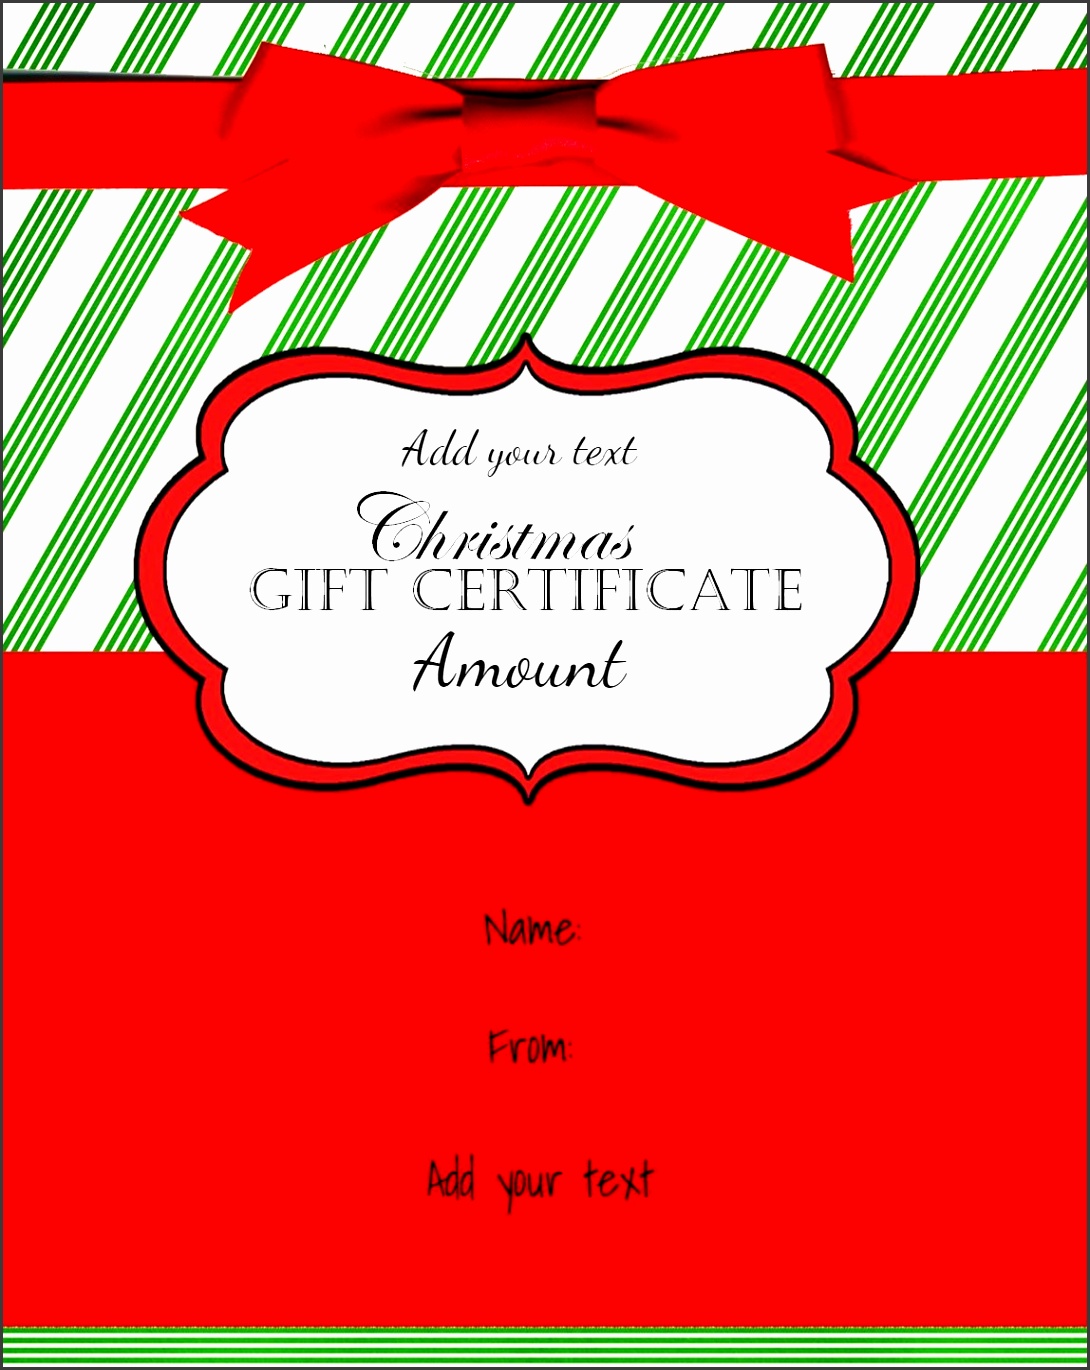 5-christmas-gift-voucher-template-free-download-sampletemplatess